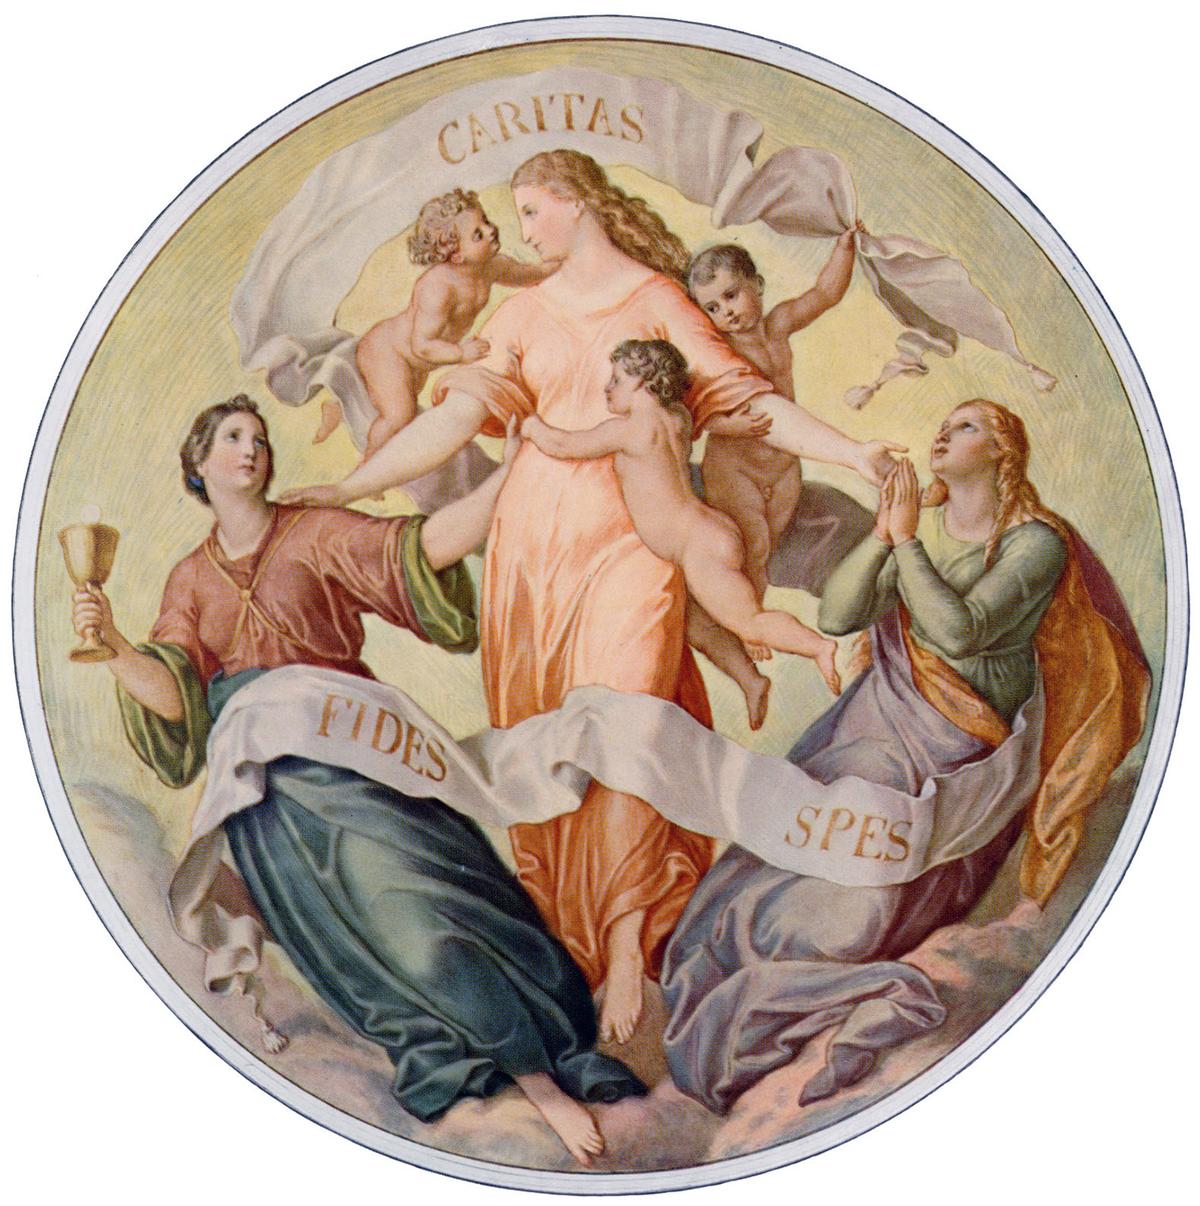 Depiction of Fides (Faith), Spes (Hope), and Caritas (Charity), 19th century, by Julius Schnorr von Carolsfeld. (Public Domain)